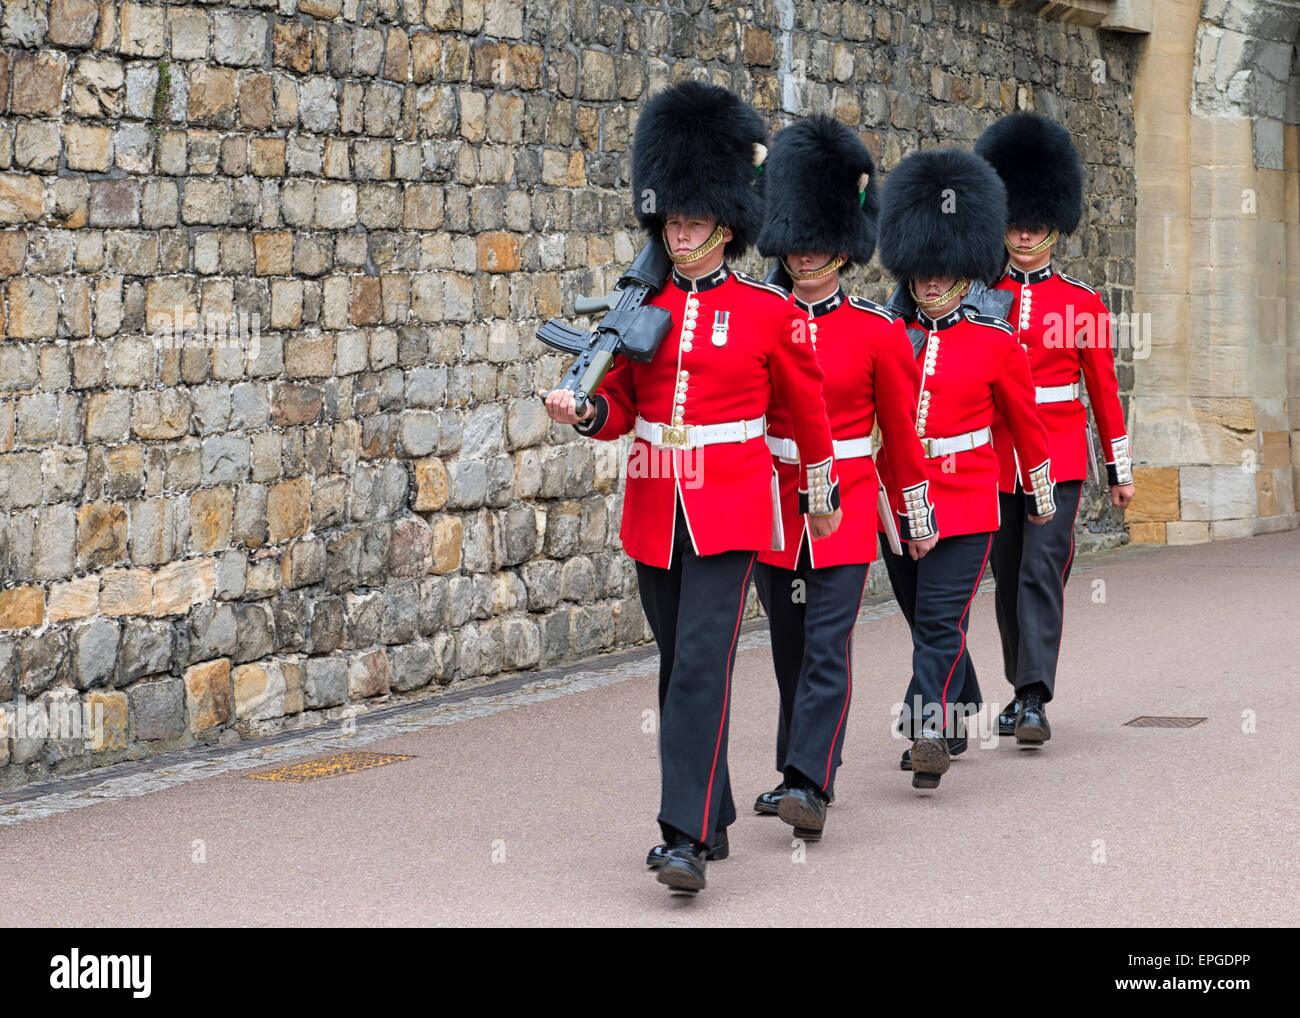 Royal Guards at Windsor Castle, UK Stock Photo